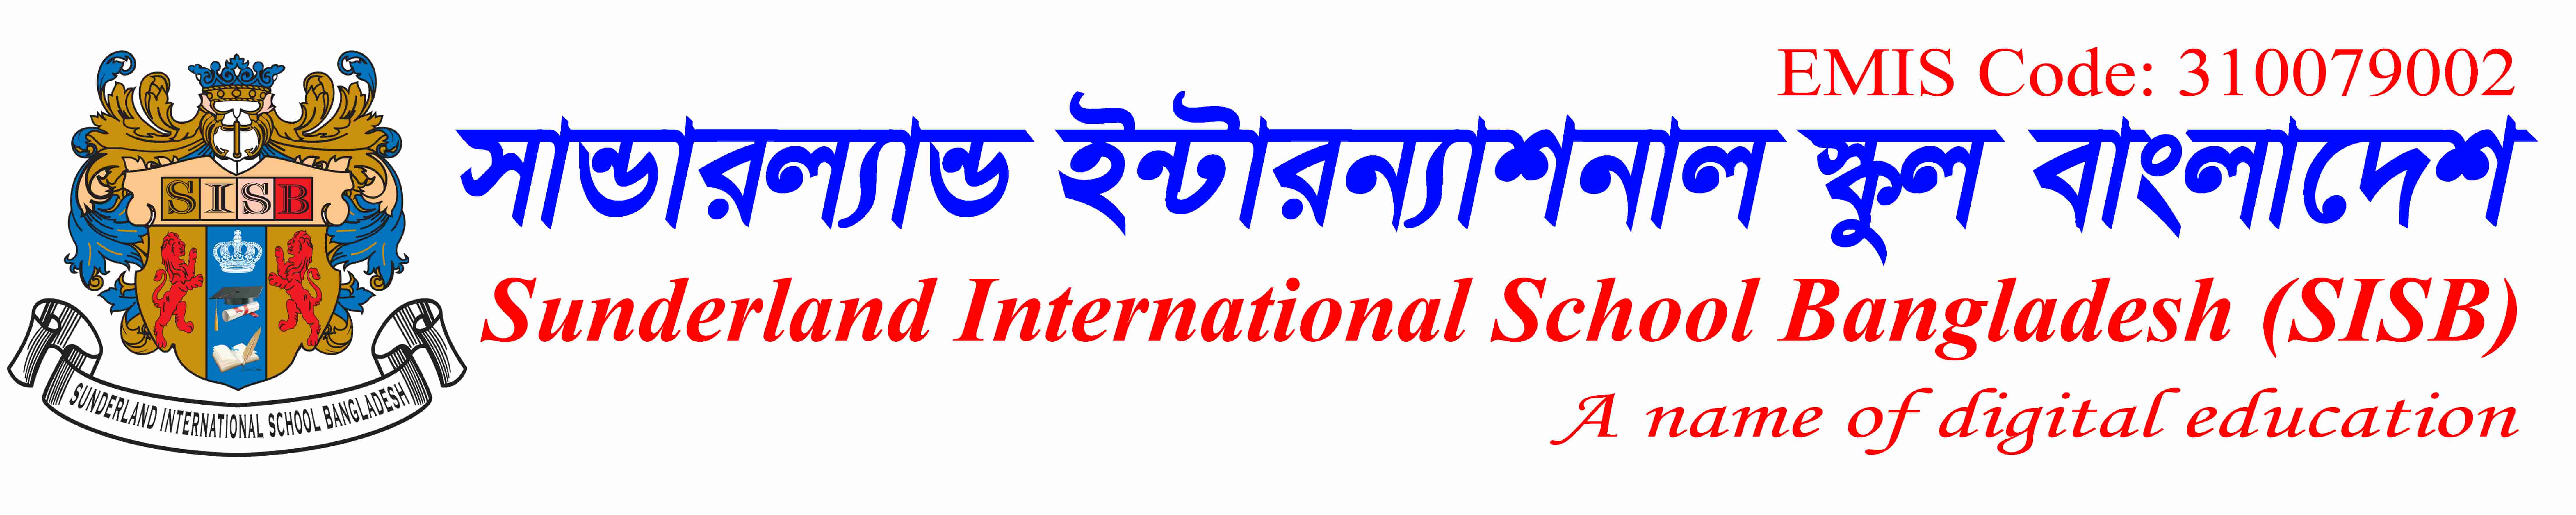 Sunderland International School Bangladesh (SISB)